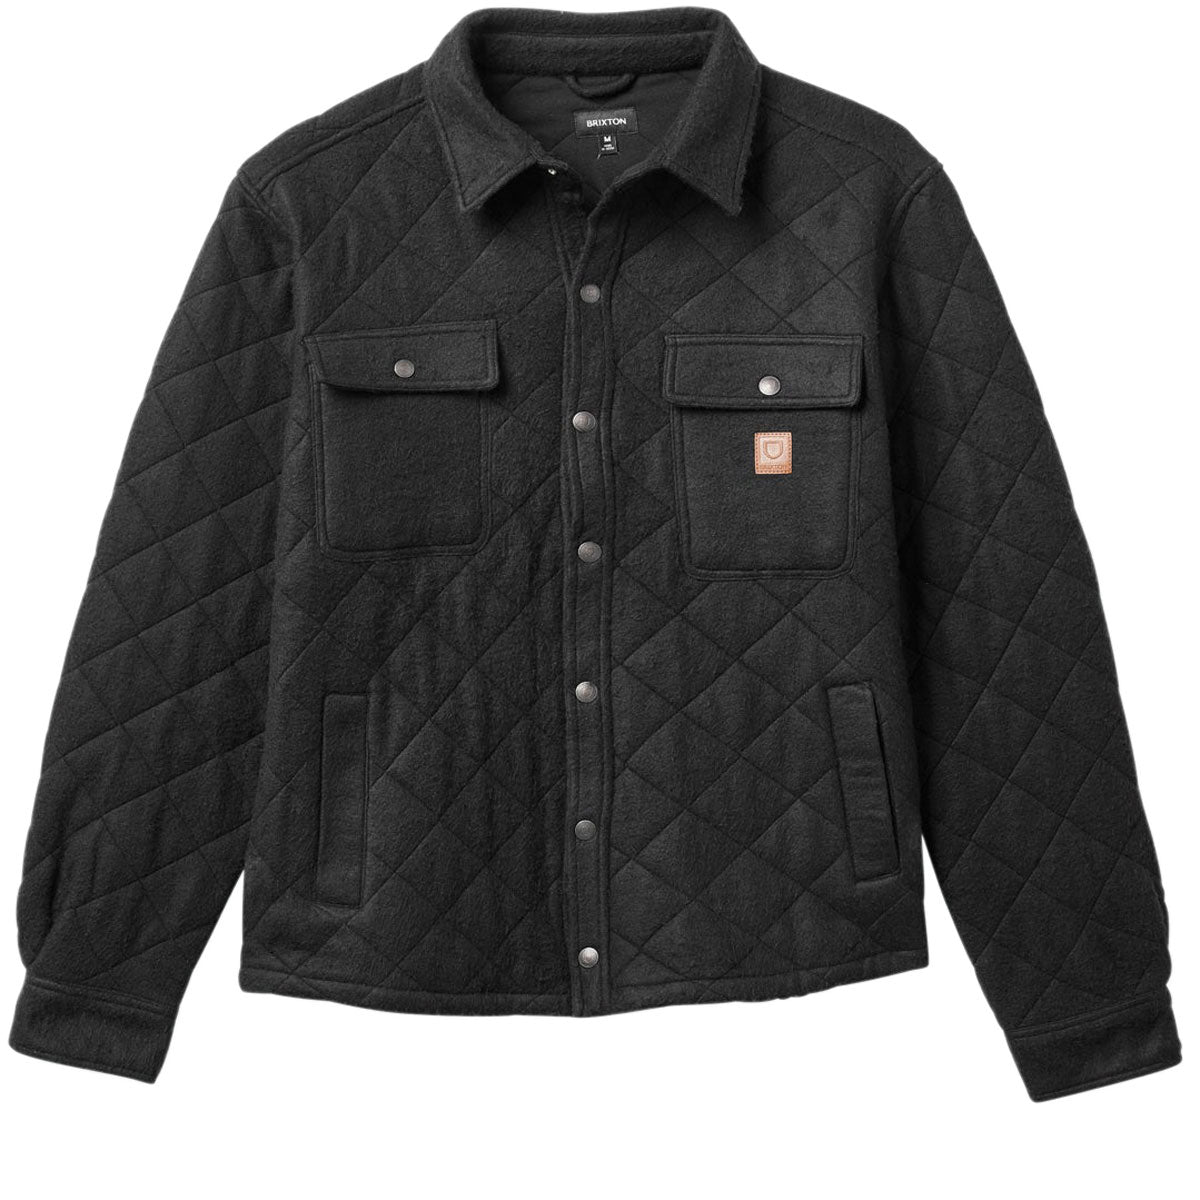 Brixton Cass Quilted Fleece Jacket - Black image 4